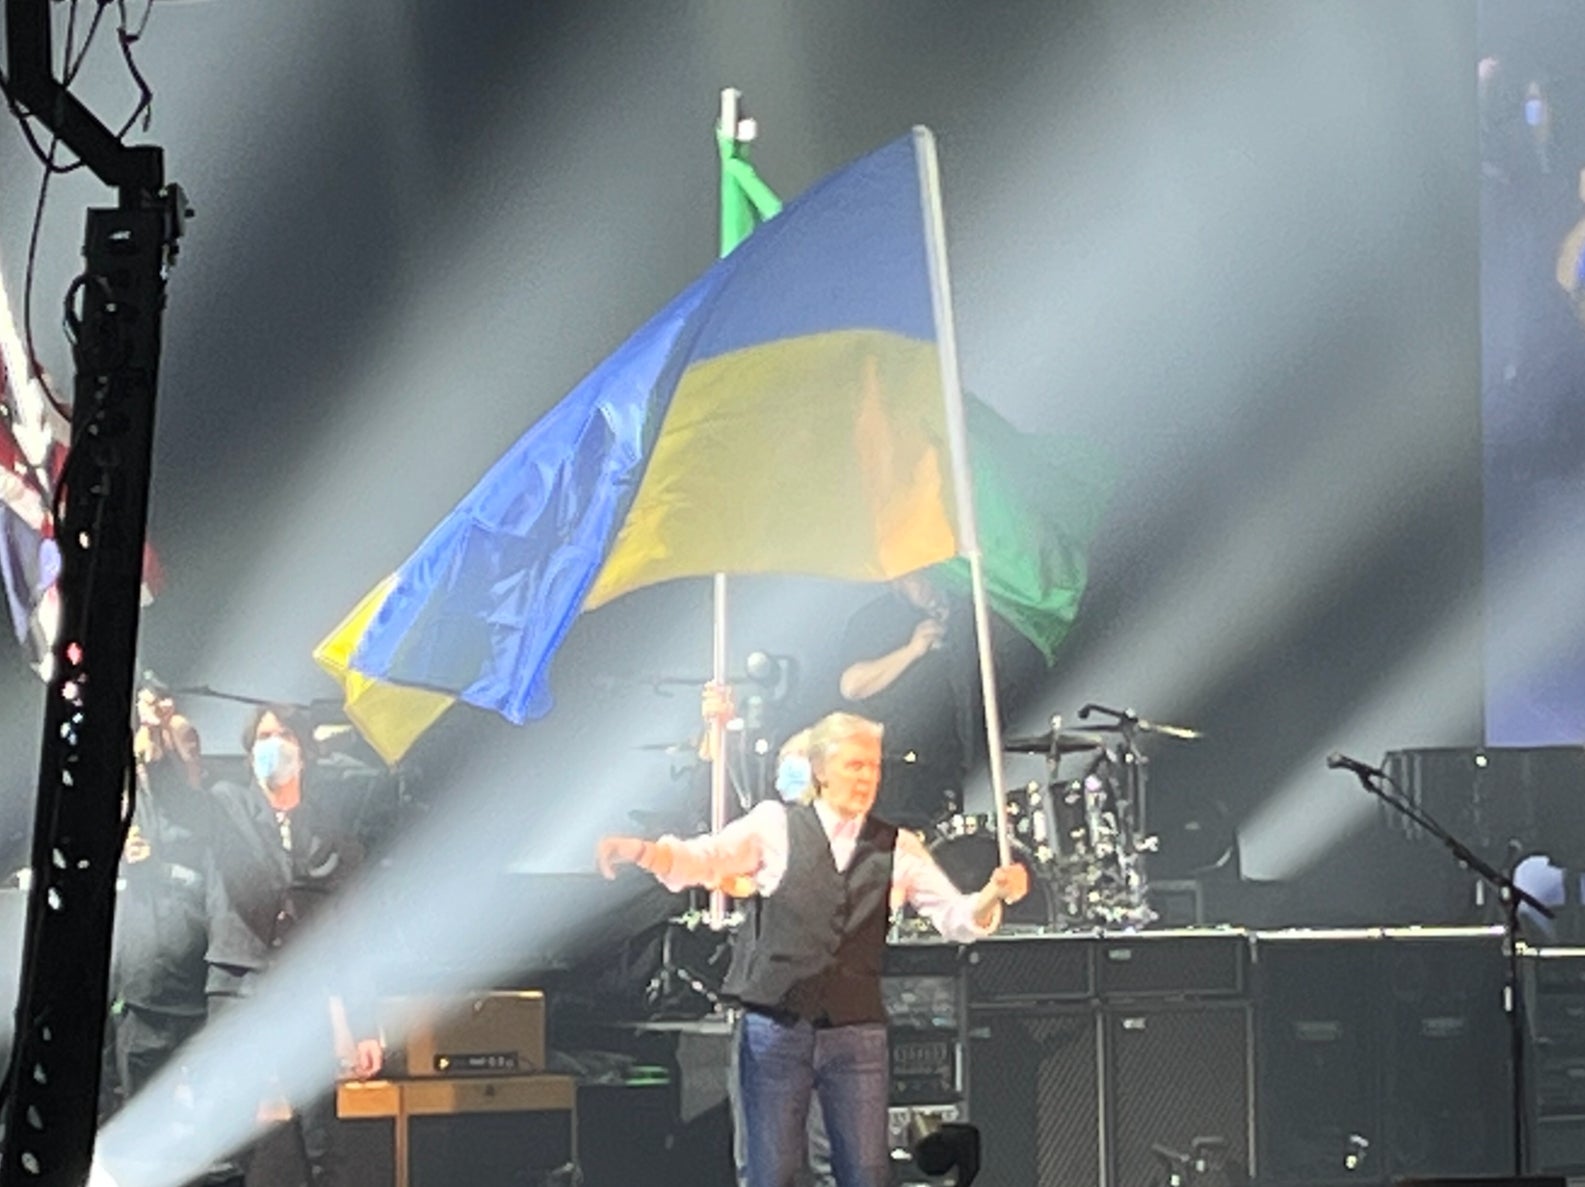 Paul McCartney during his concert in Spokane, Washington